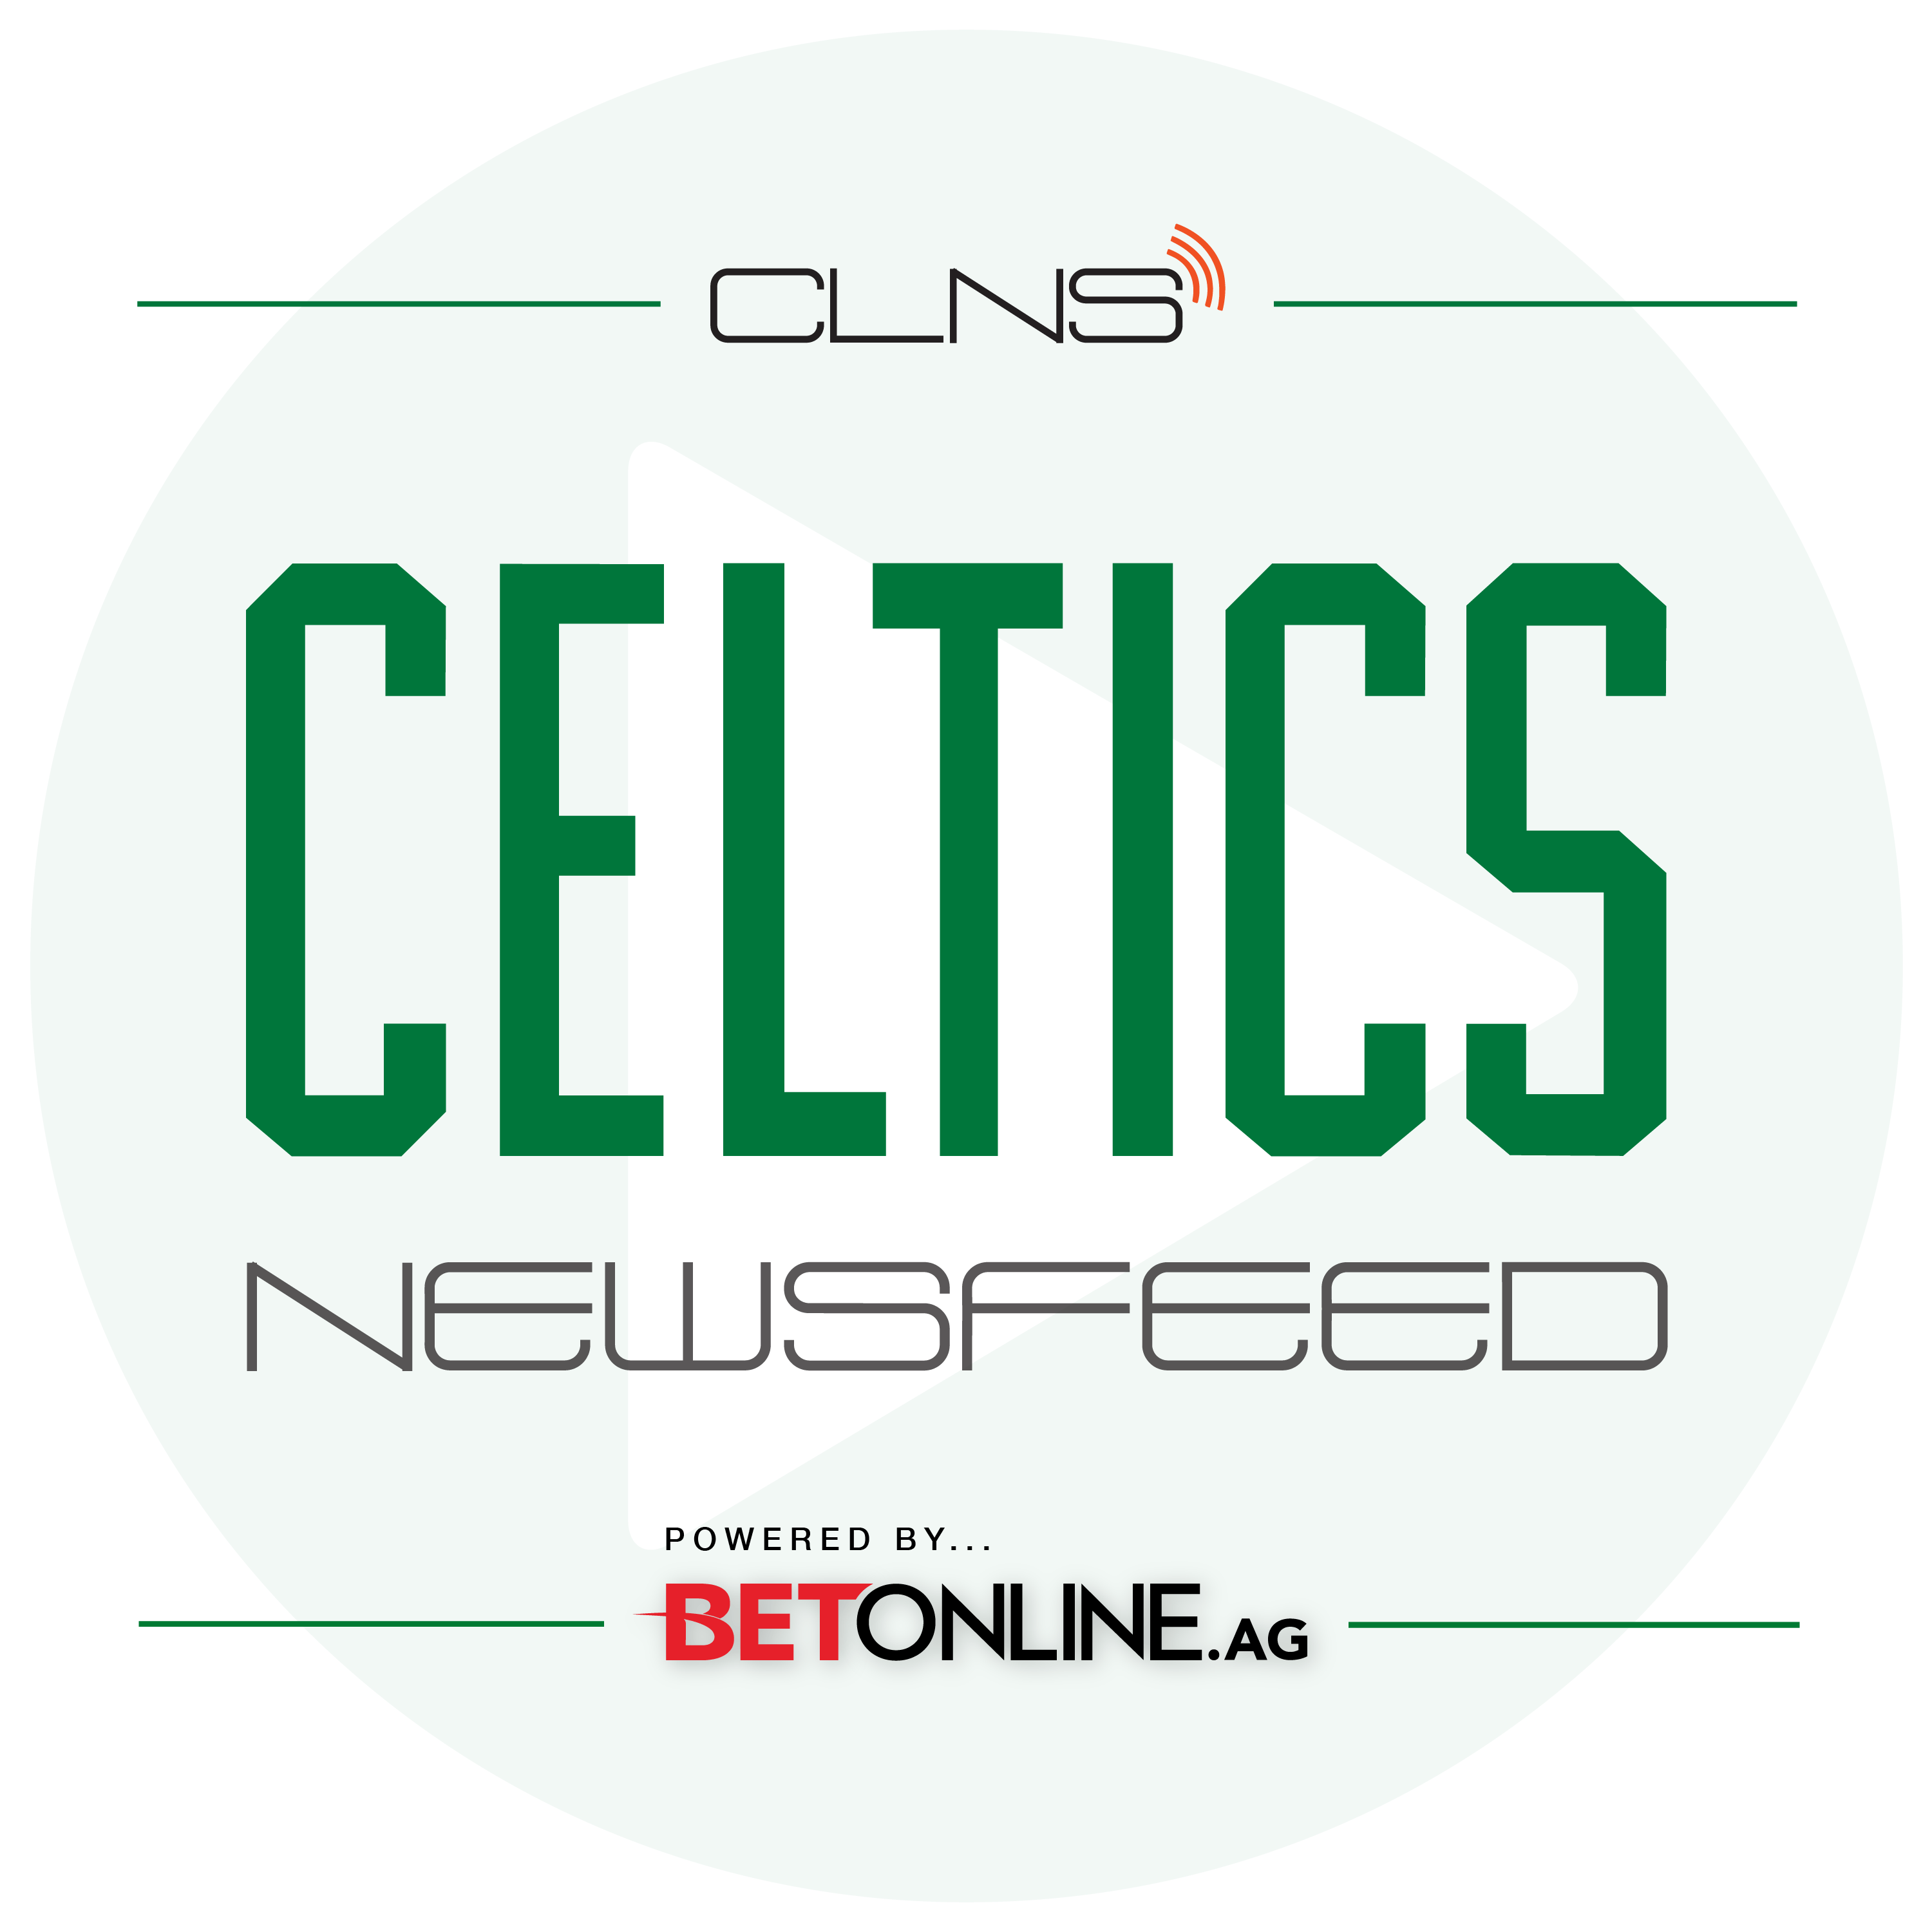 Boston Celtics News Feed